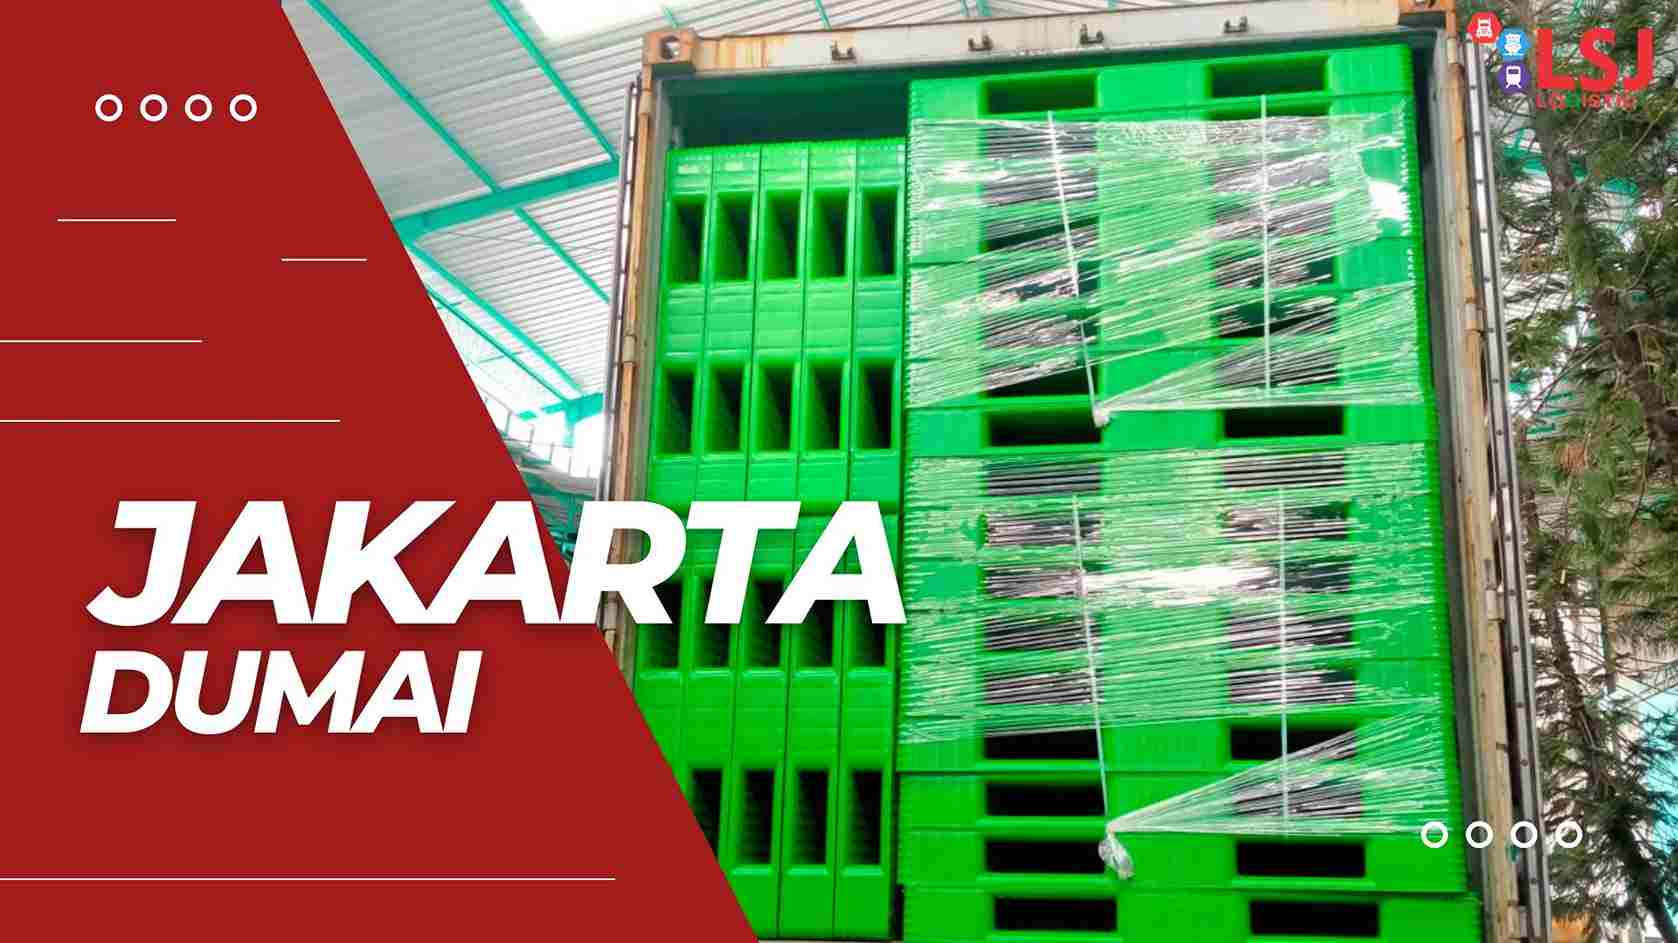 Cargo Container Jakarta Dumai